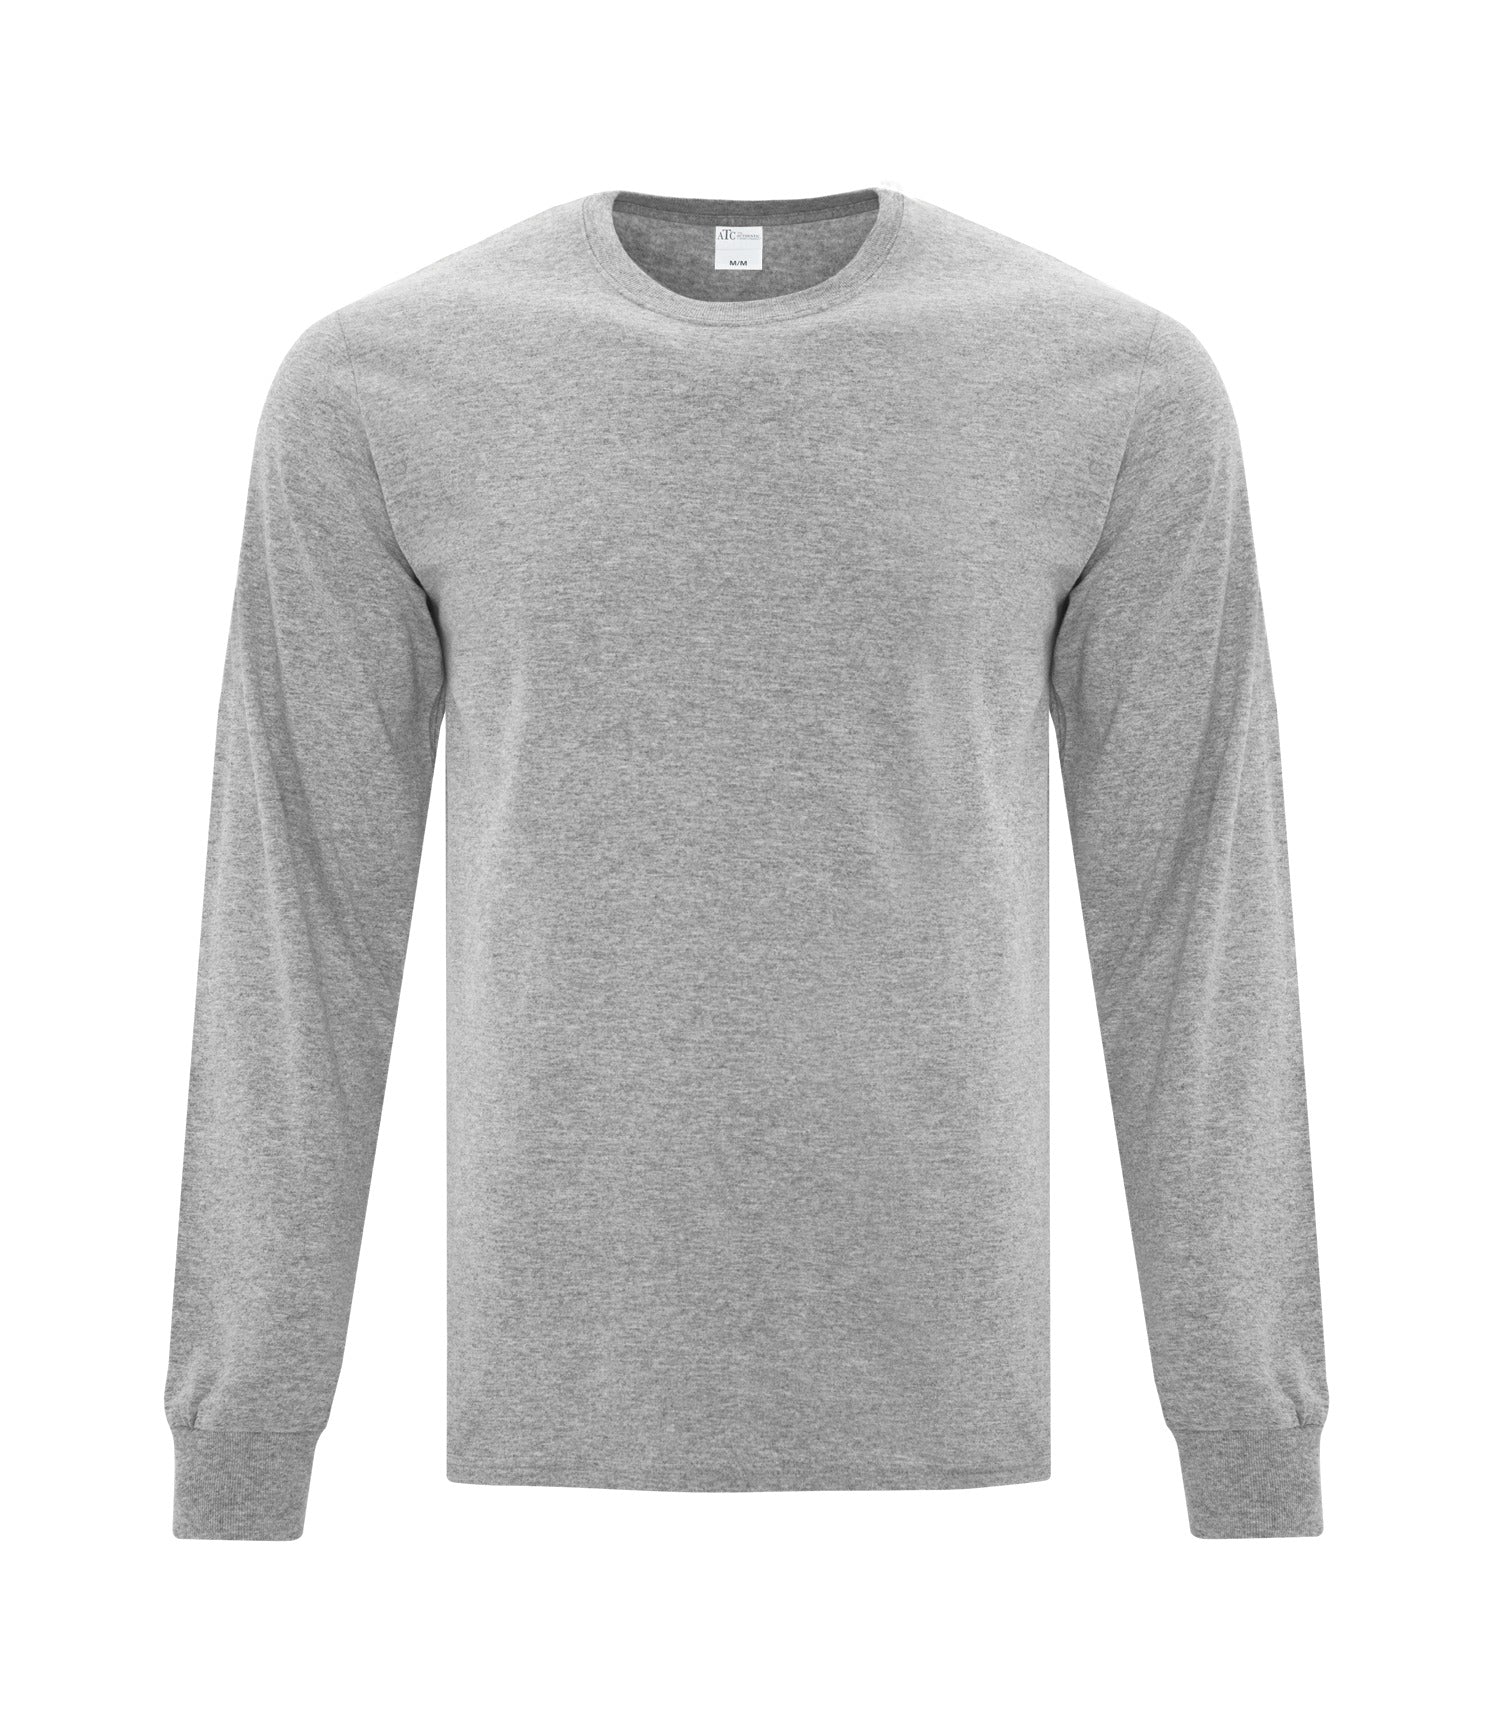 BELLA + CANVAS - Unisex Jersey Long Sleeve Tee - 3501 - Budget Promotion  Long Sleeve T-Shirt CA$ 19.89